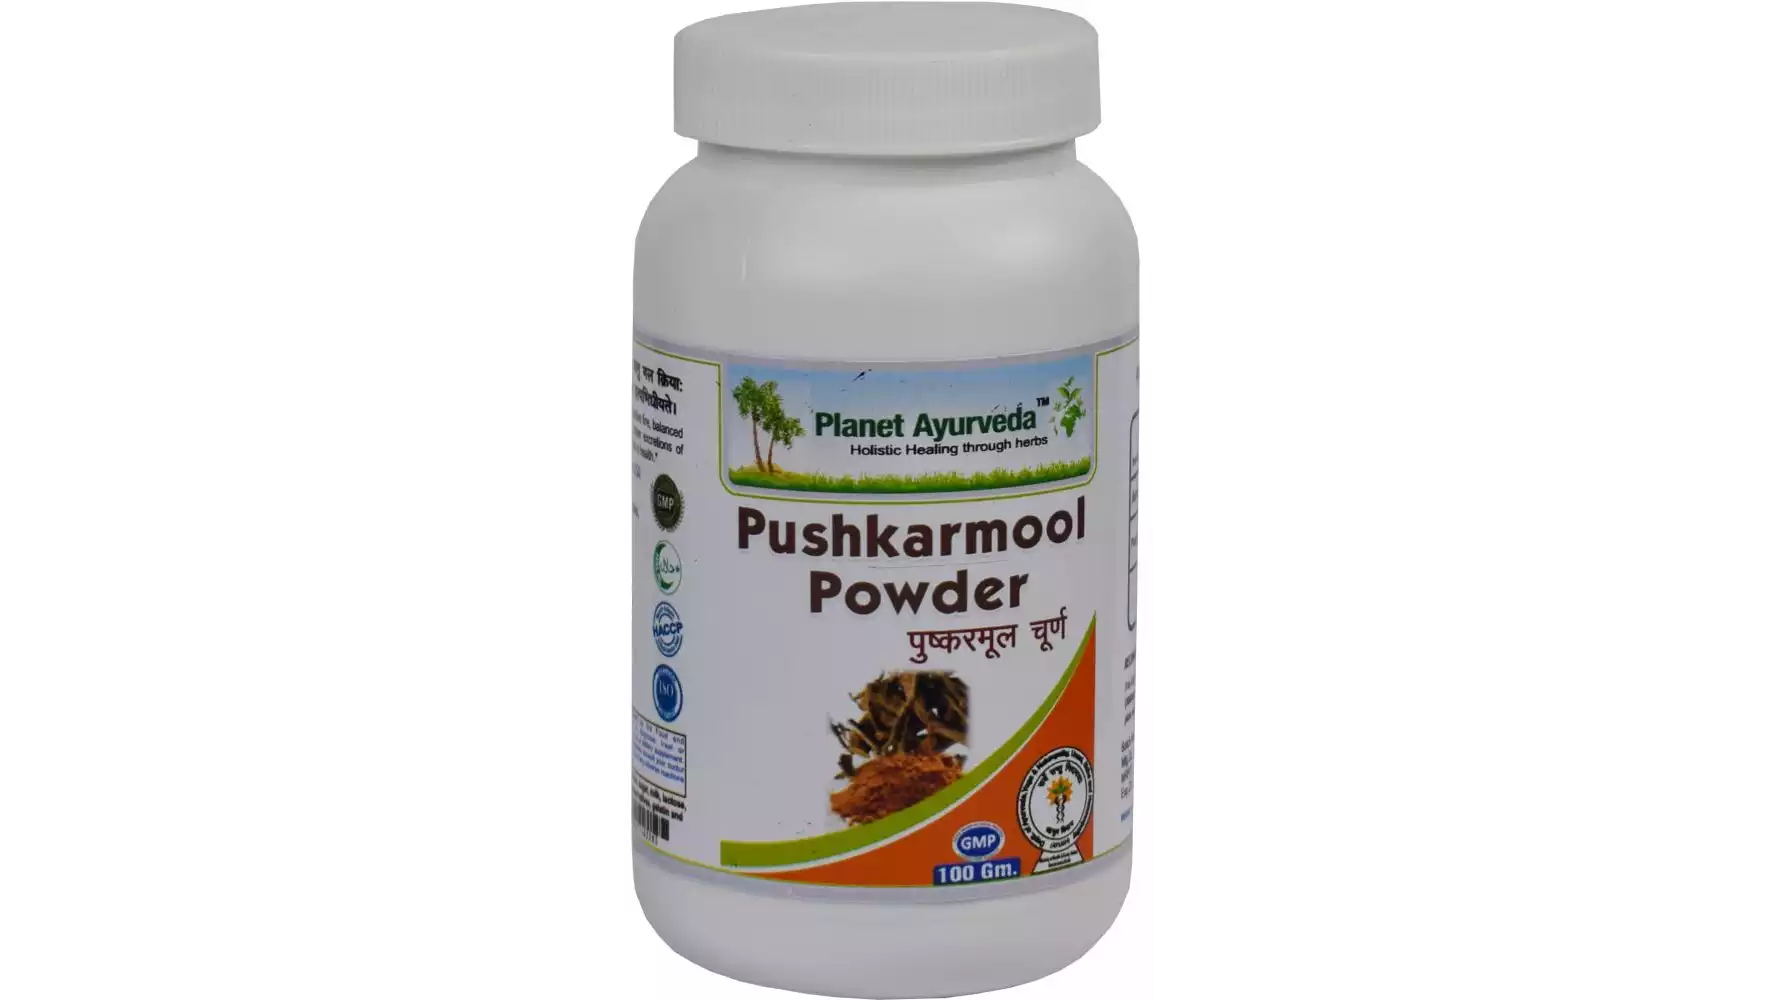 Planet Ayurveda Pushkarmool Powder (100g, Pack of 2)